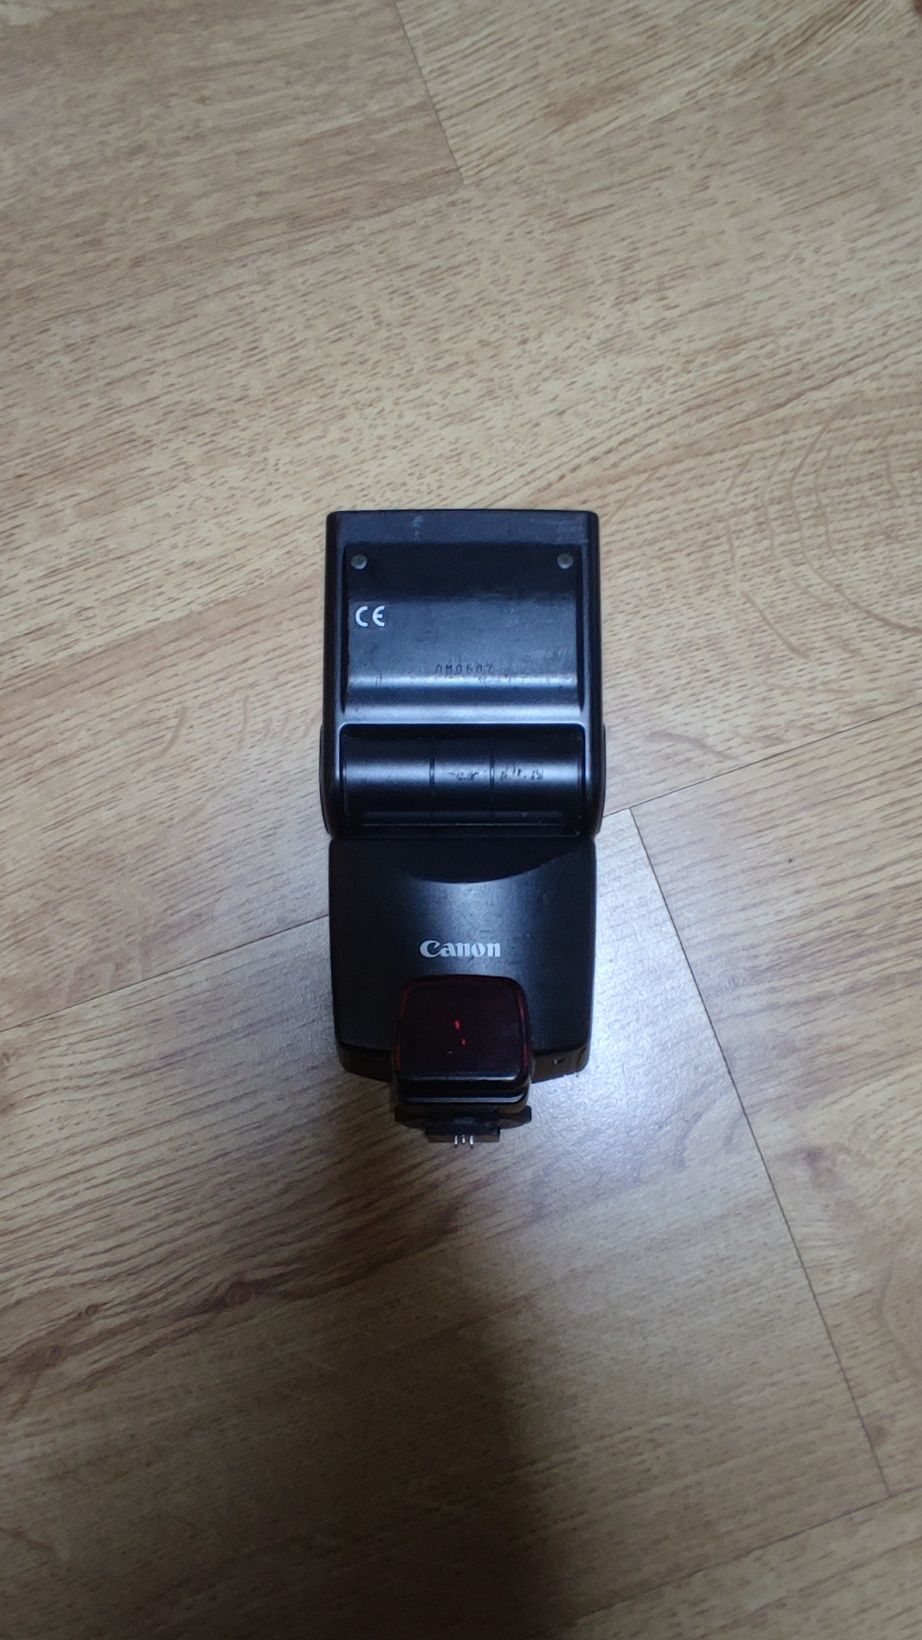 Canon 700D
- Lente EFS 18-55
- Lente EFS 55-250
- Grip BG-E8